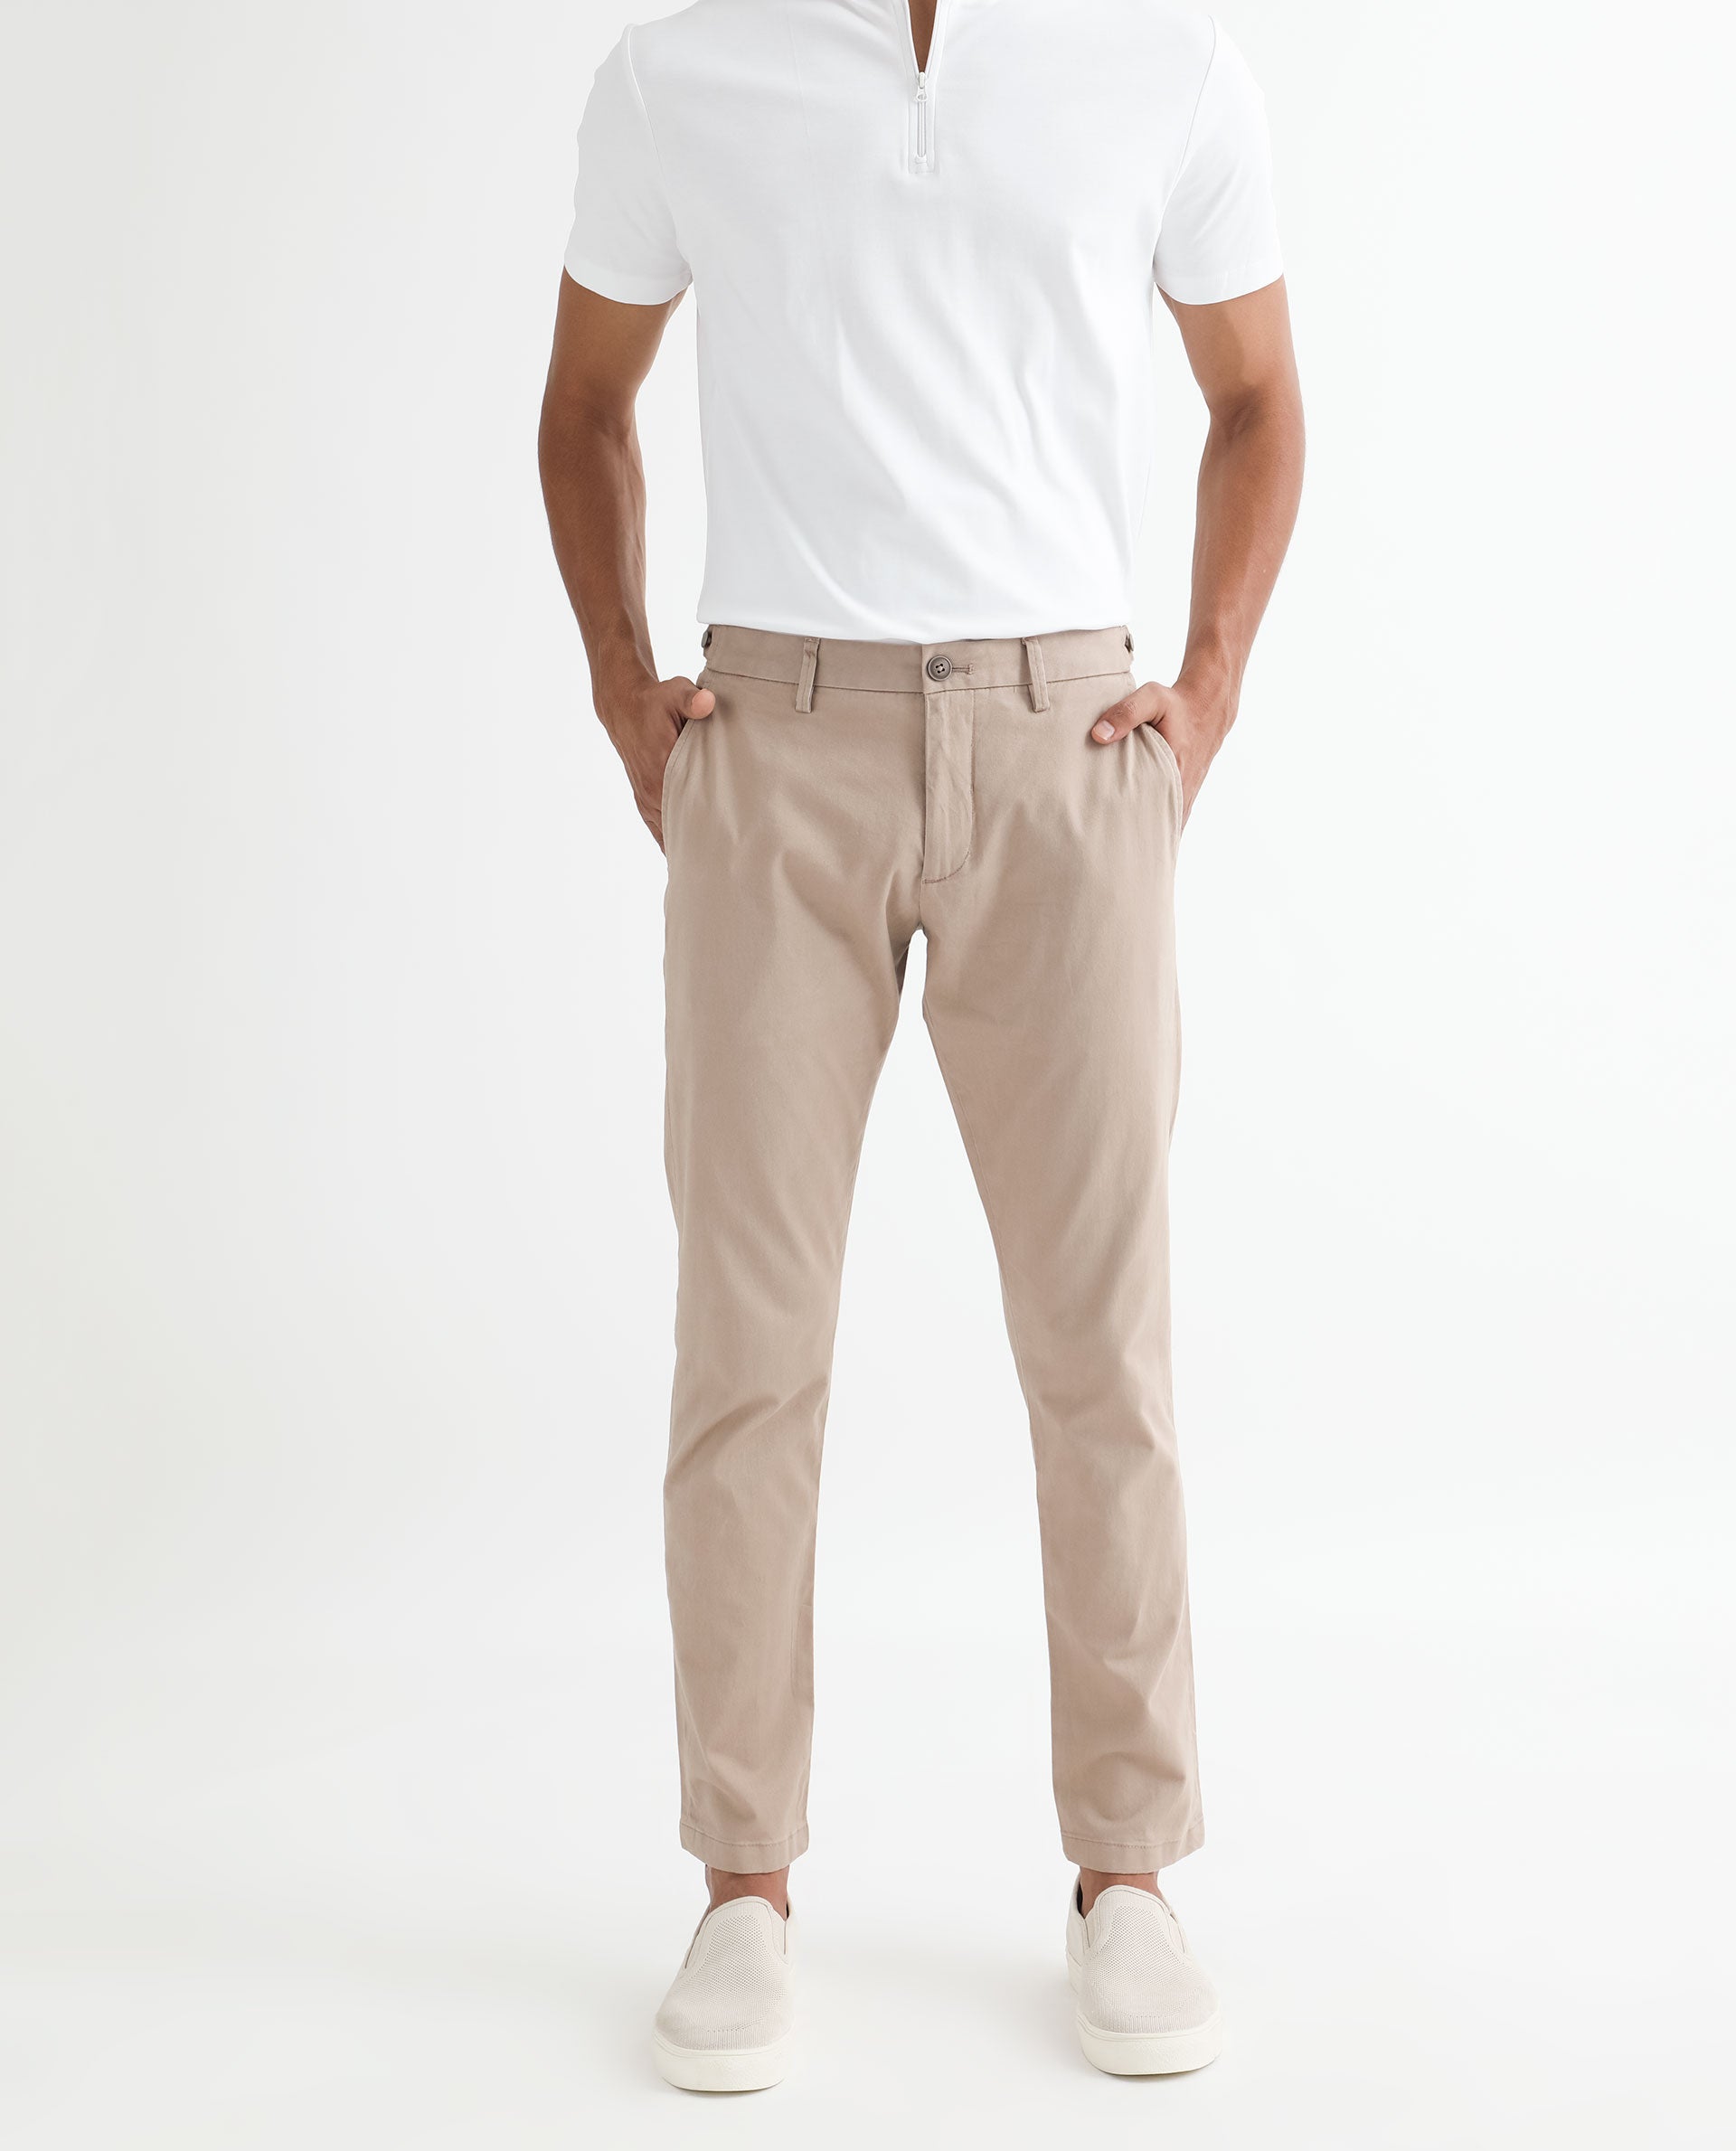 Mantova Gray Slim Fit Cotton Pants freeshipping - BOJONI | Slim fit cotton  pants, Cotton pants, Mens pants fashion